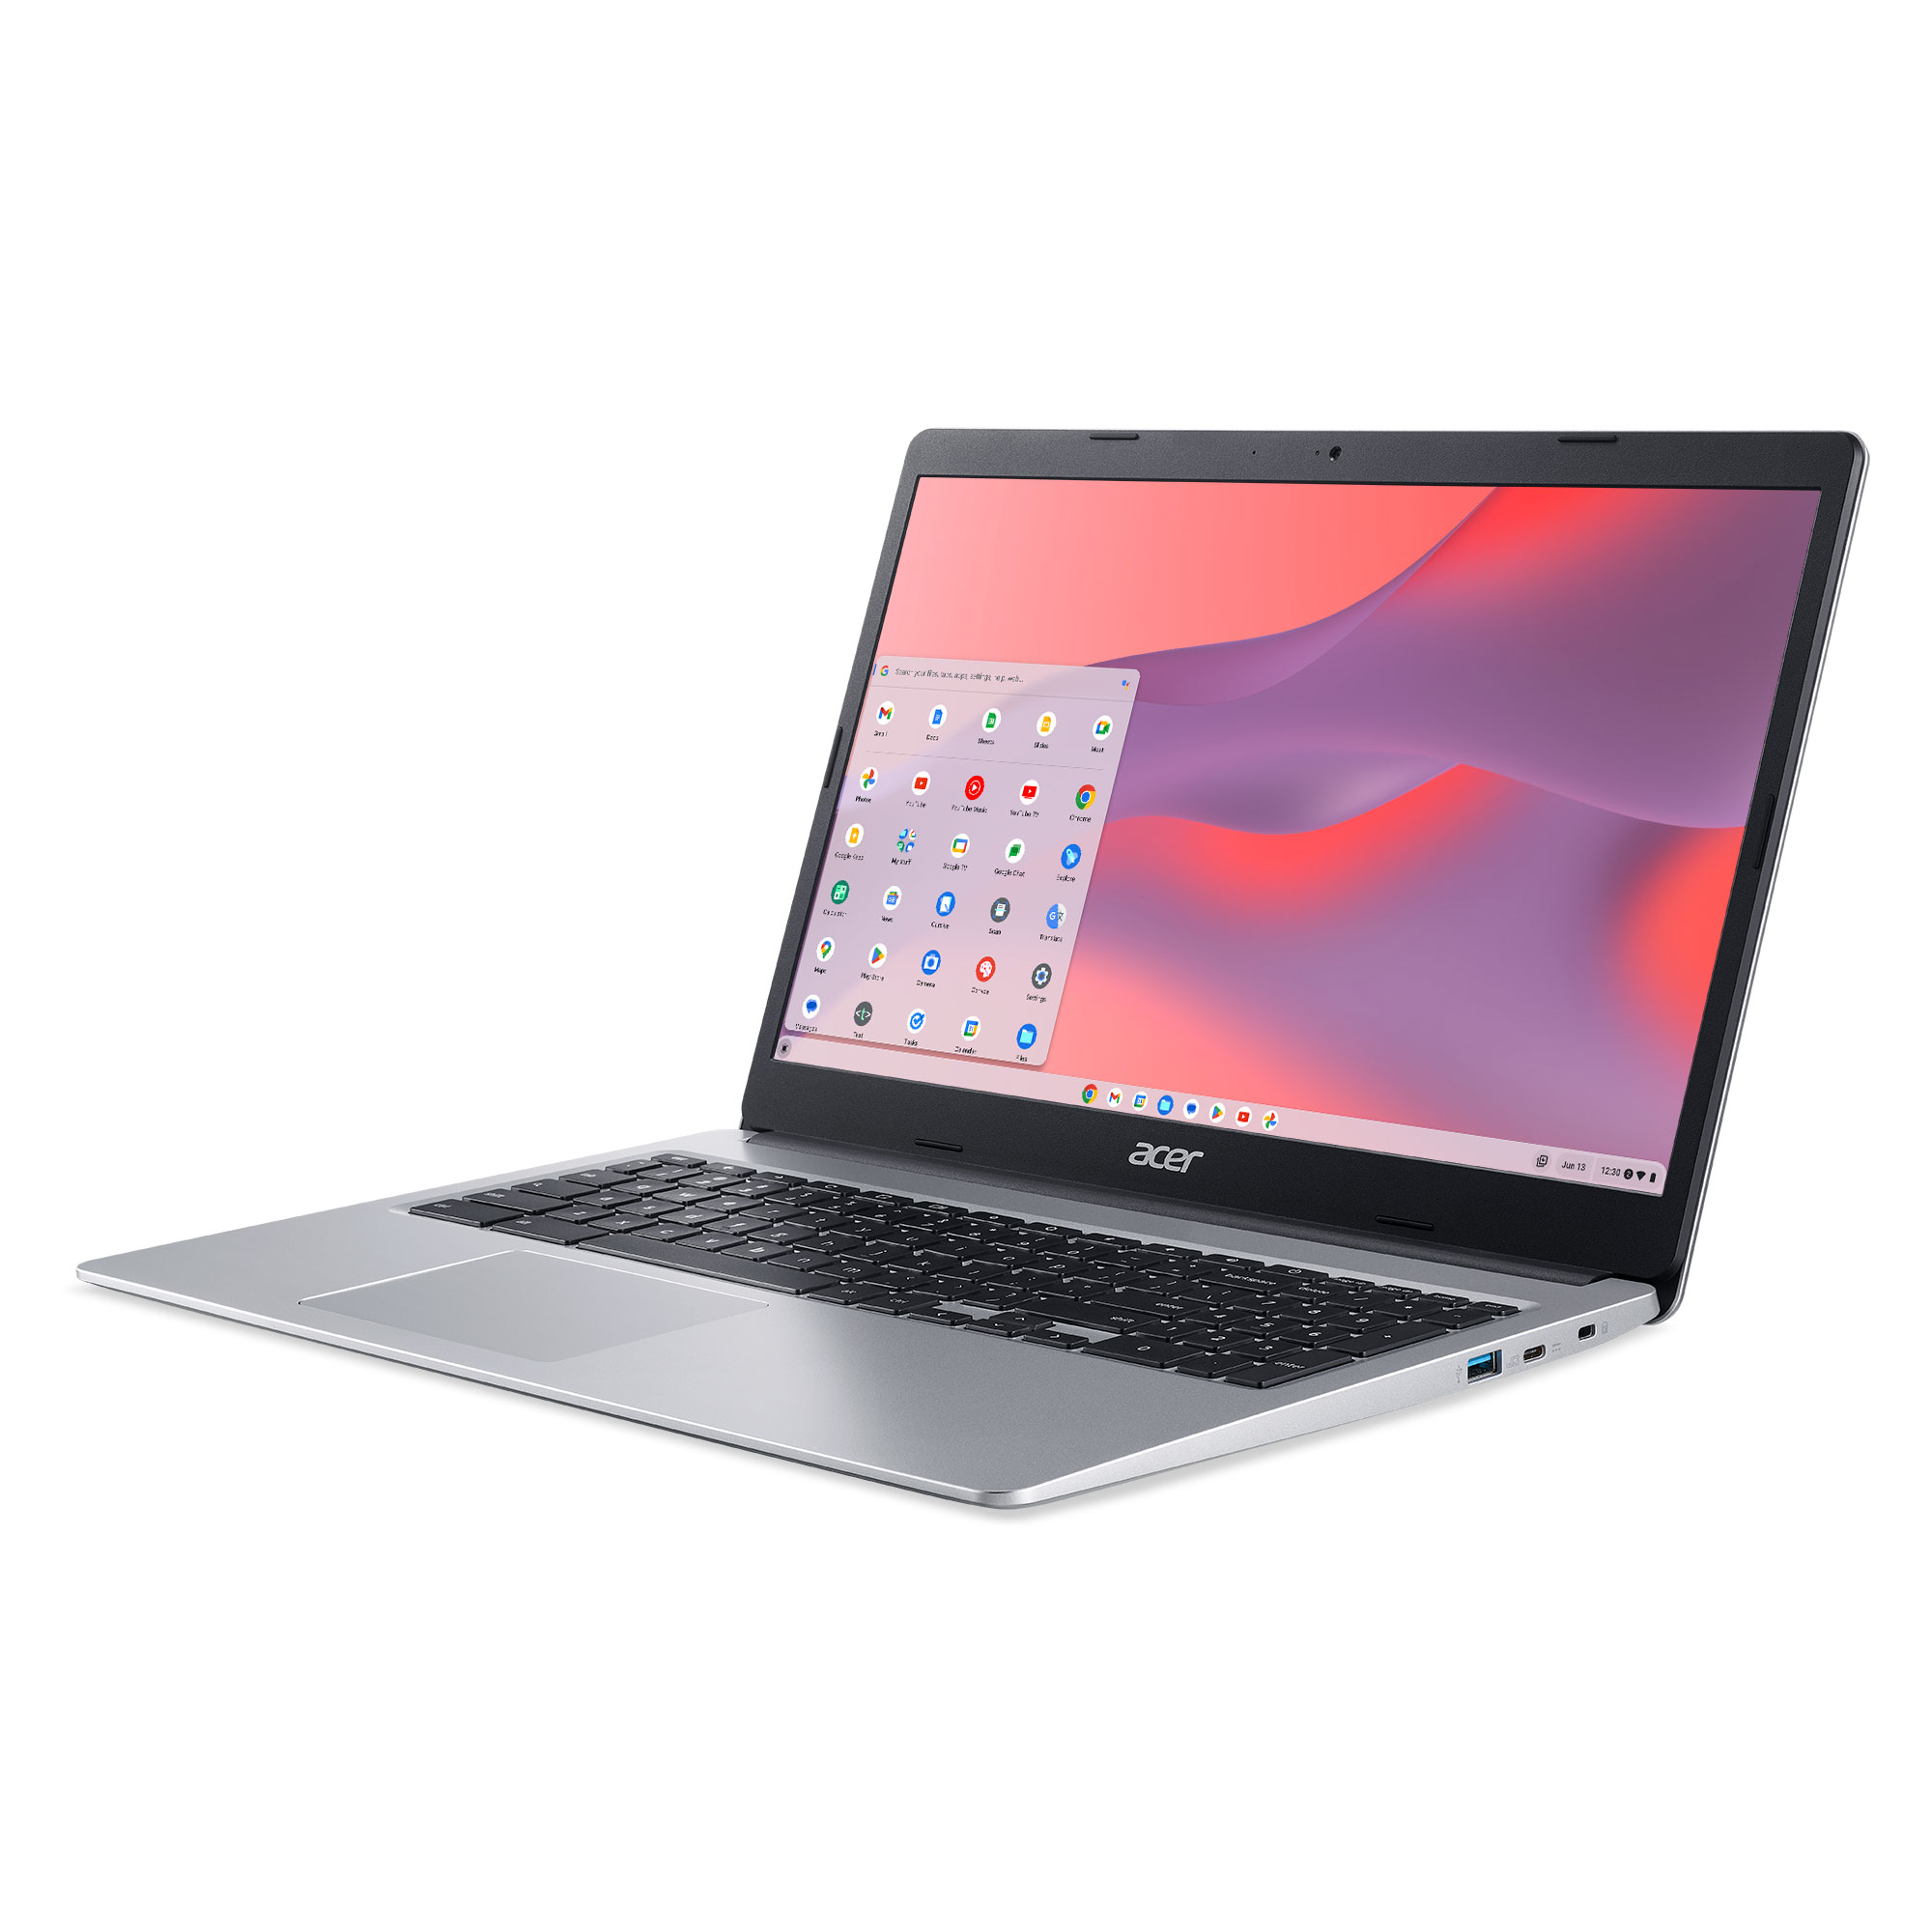 Acer 315 Chromebook, 15.6" FHD IPS Touchscreen Display, Intel Celeron N4020, 4GB RAM, 64GB eMMC, Bluetooth 5.0, Chrome OS, Silver, CB315-3HT-C5D3 - image 2 of 9